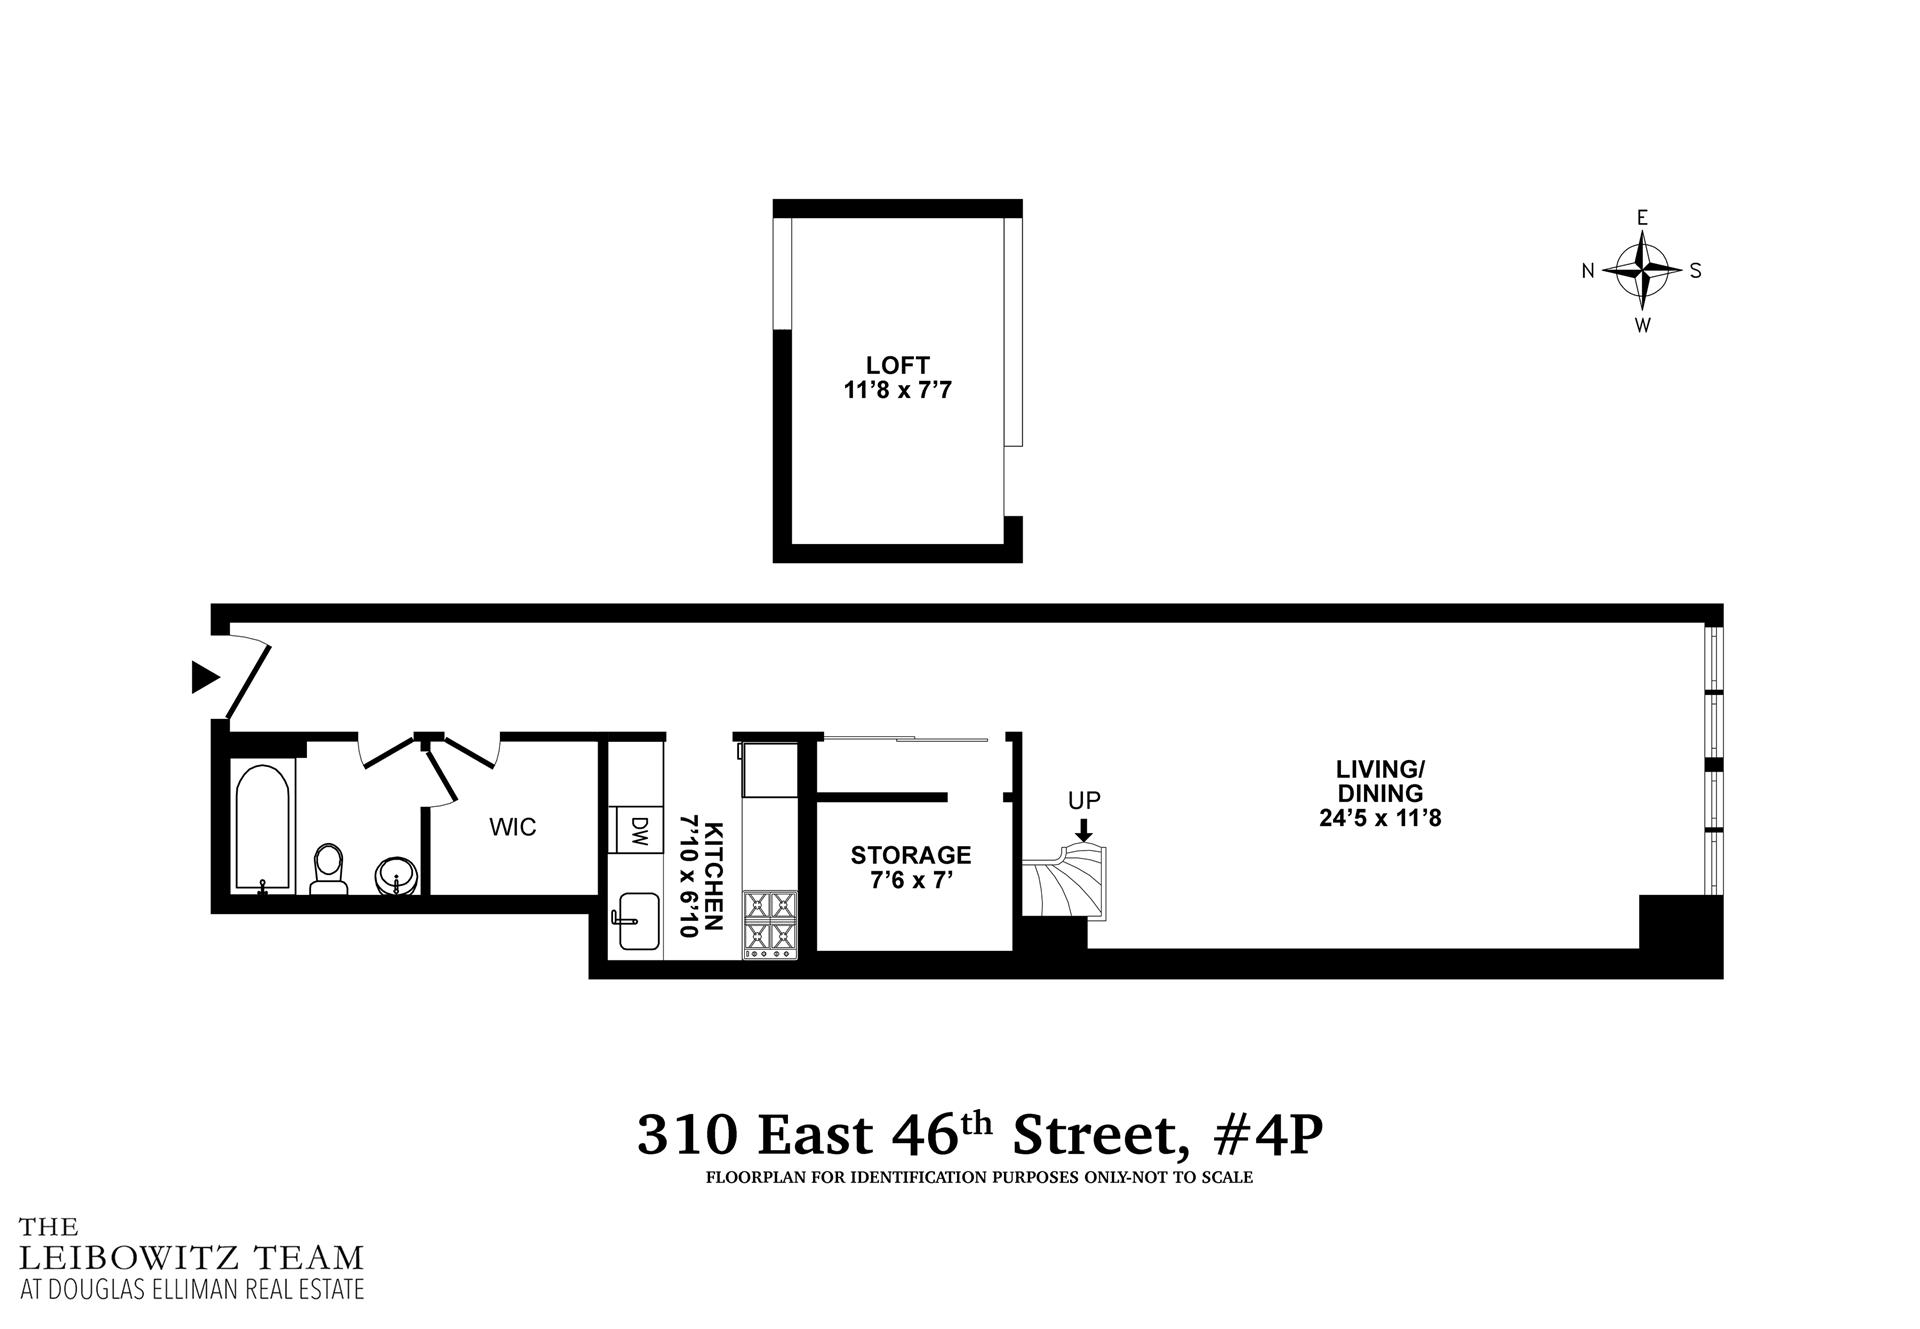 Floorplan for 310 East 46th Street, 4P